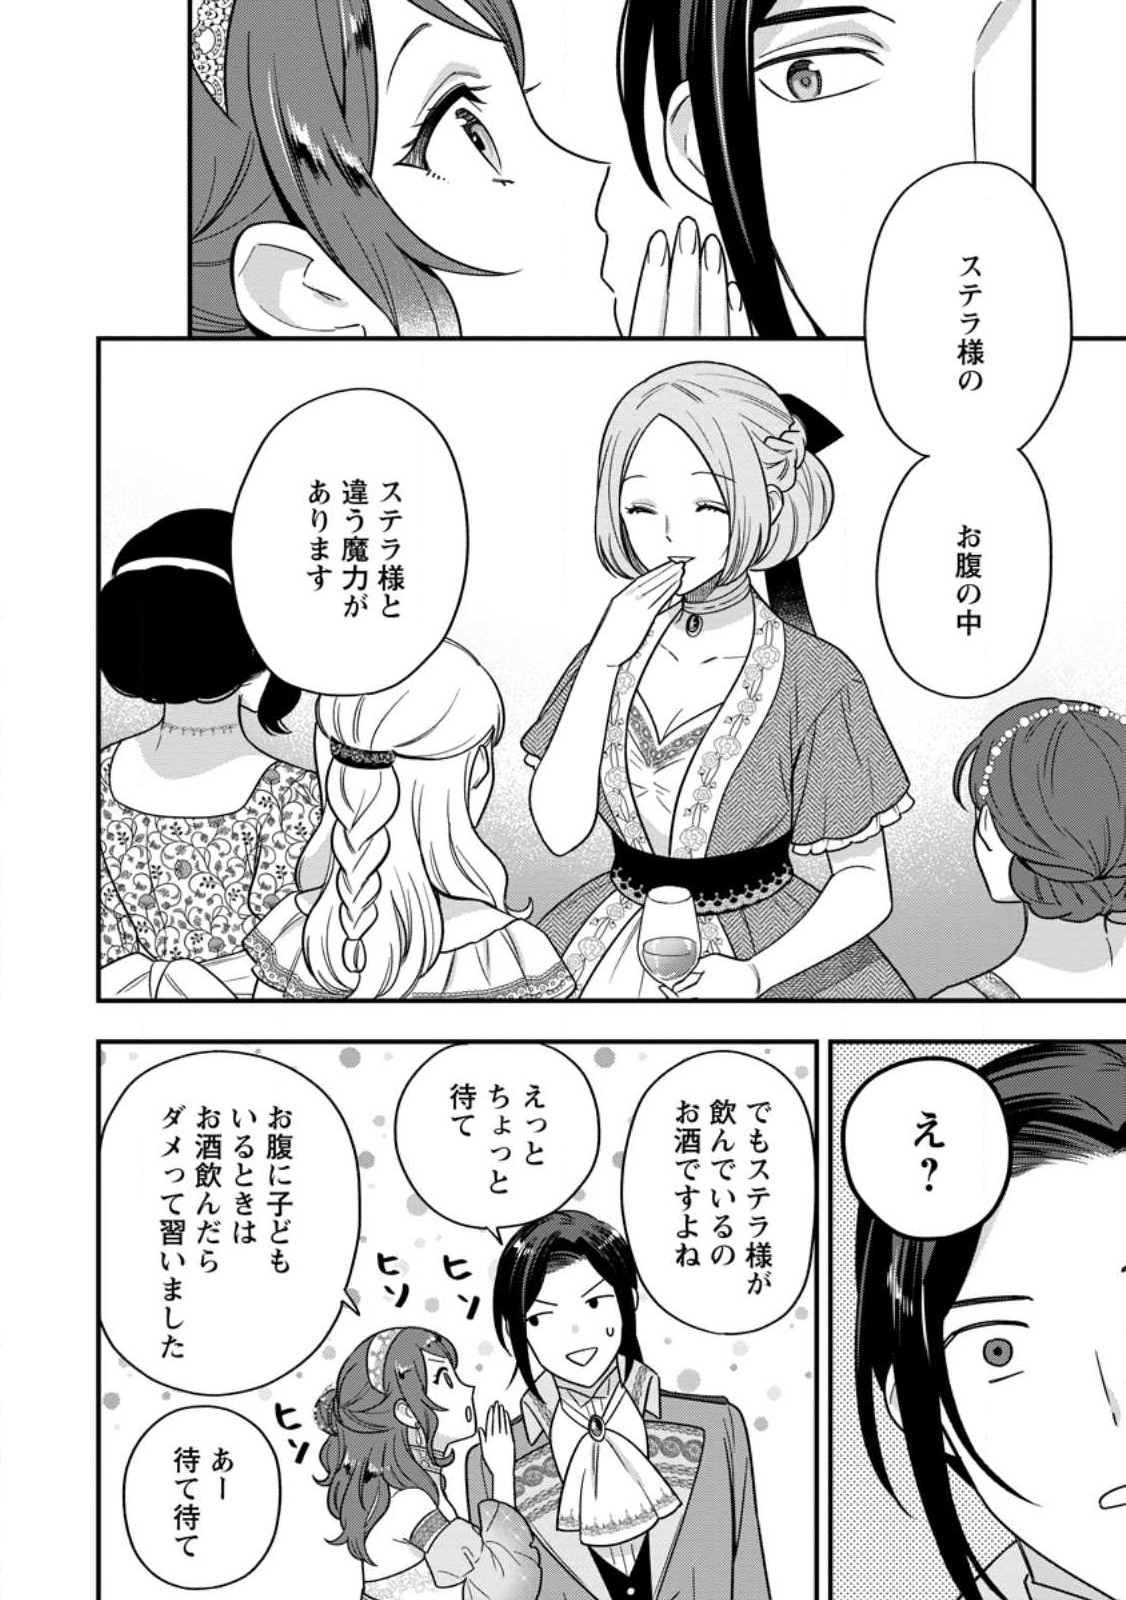 Aisanai to Iwaremashite mo - Chapter 12.3 - Page 4